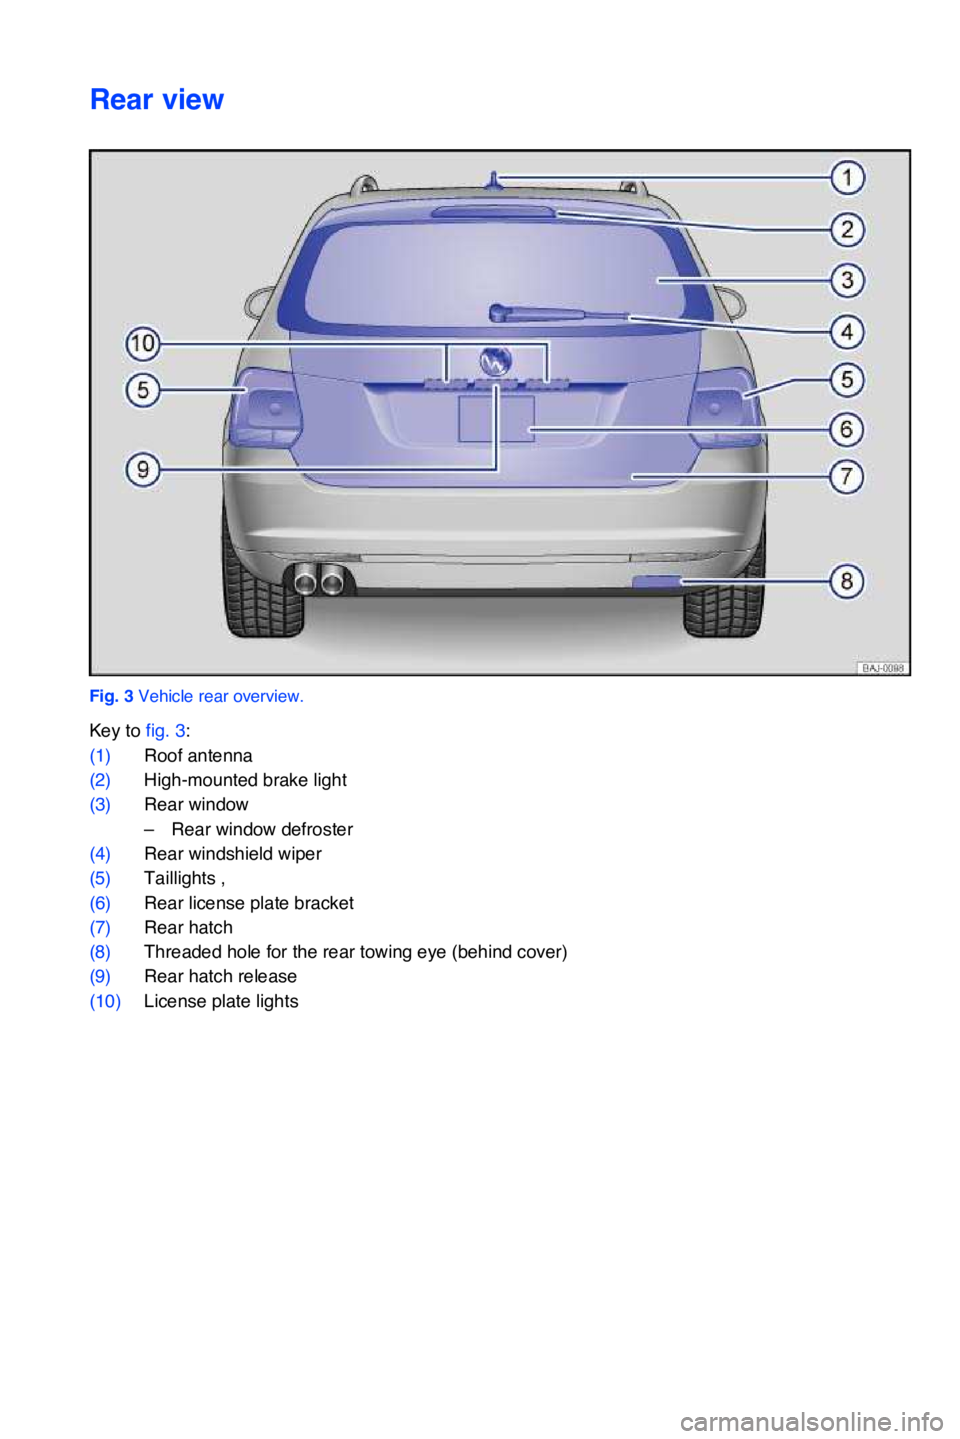 VOLKSWAGEN JETTA SPORTWAGEN 2013  Owners Manual Rear view
Fig. 3 Vehicle rear overview.
Key to fig. 3:
(1)Roof antenna 
(2)High-mounted brake light 
(3)Rear window
–Rear window defroster 
(4)Rear windshield wiper 
(5)Taillights , 
(6)Rear license